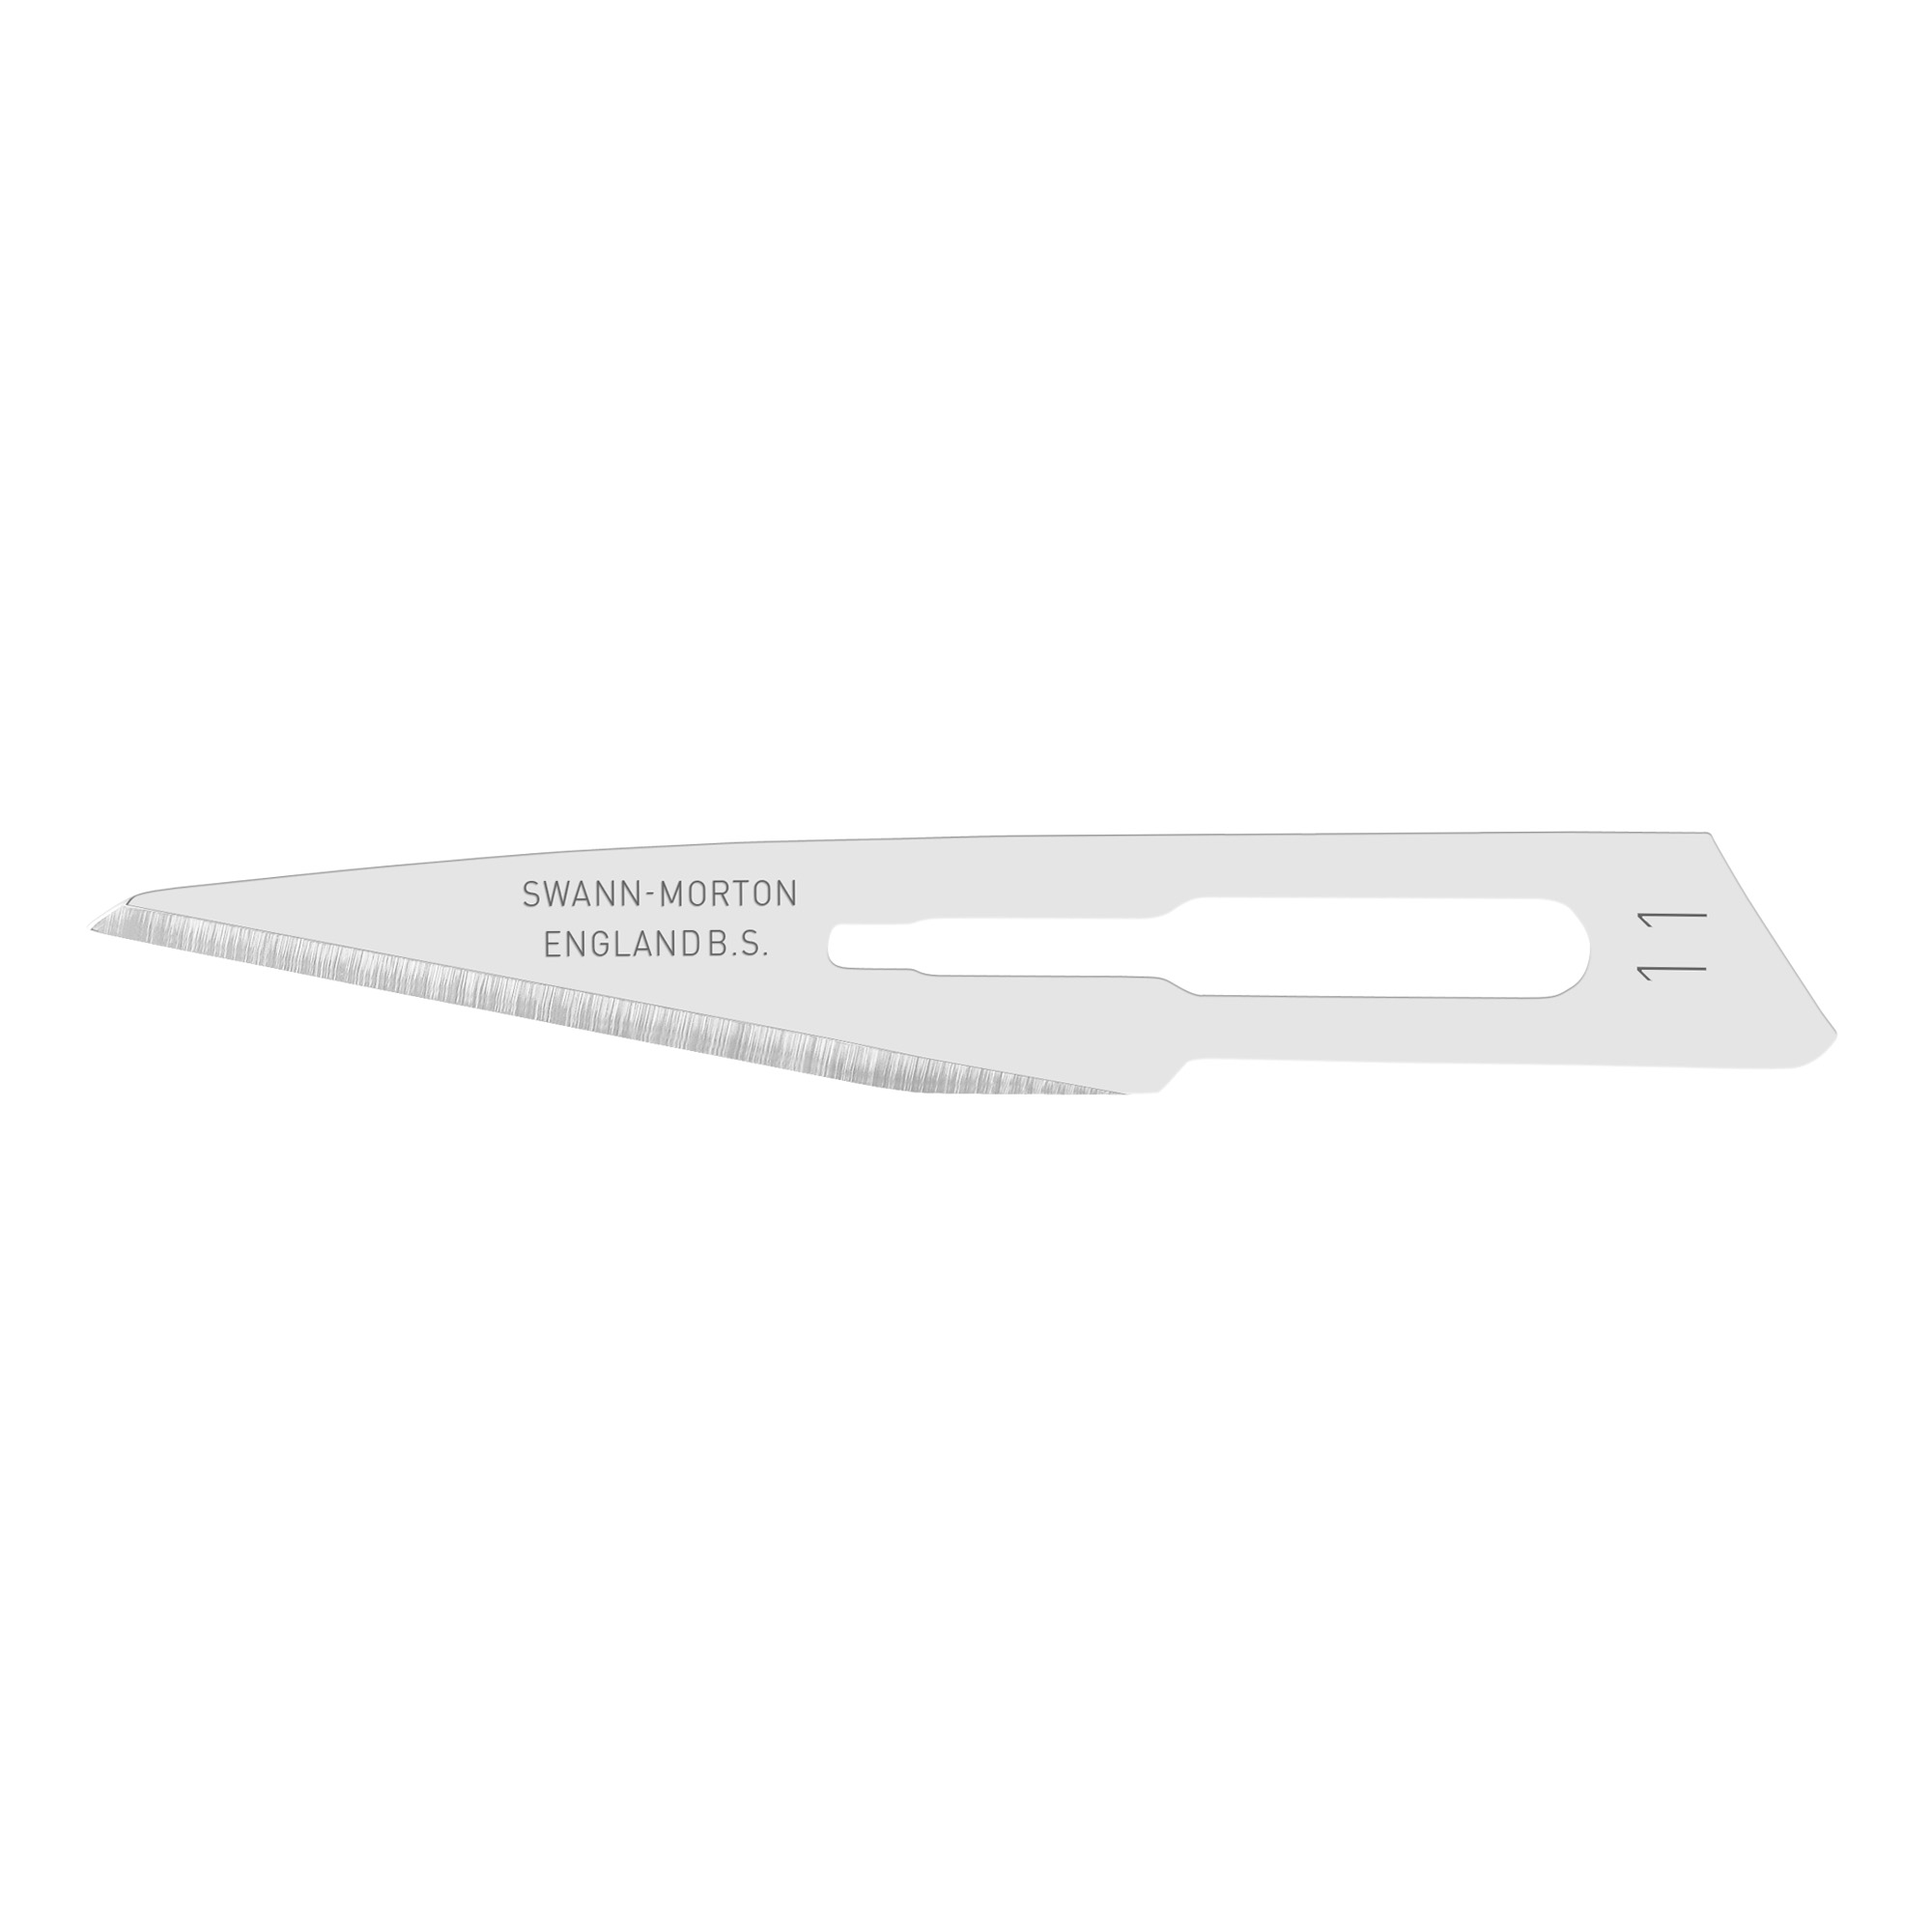 Sterile single-use professional scalpel blades Swann-Morton size 11 100 pcs